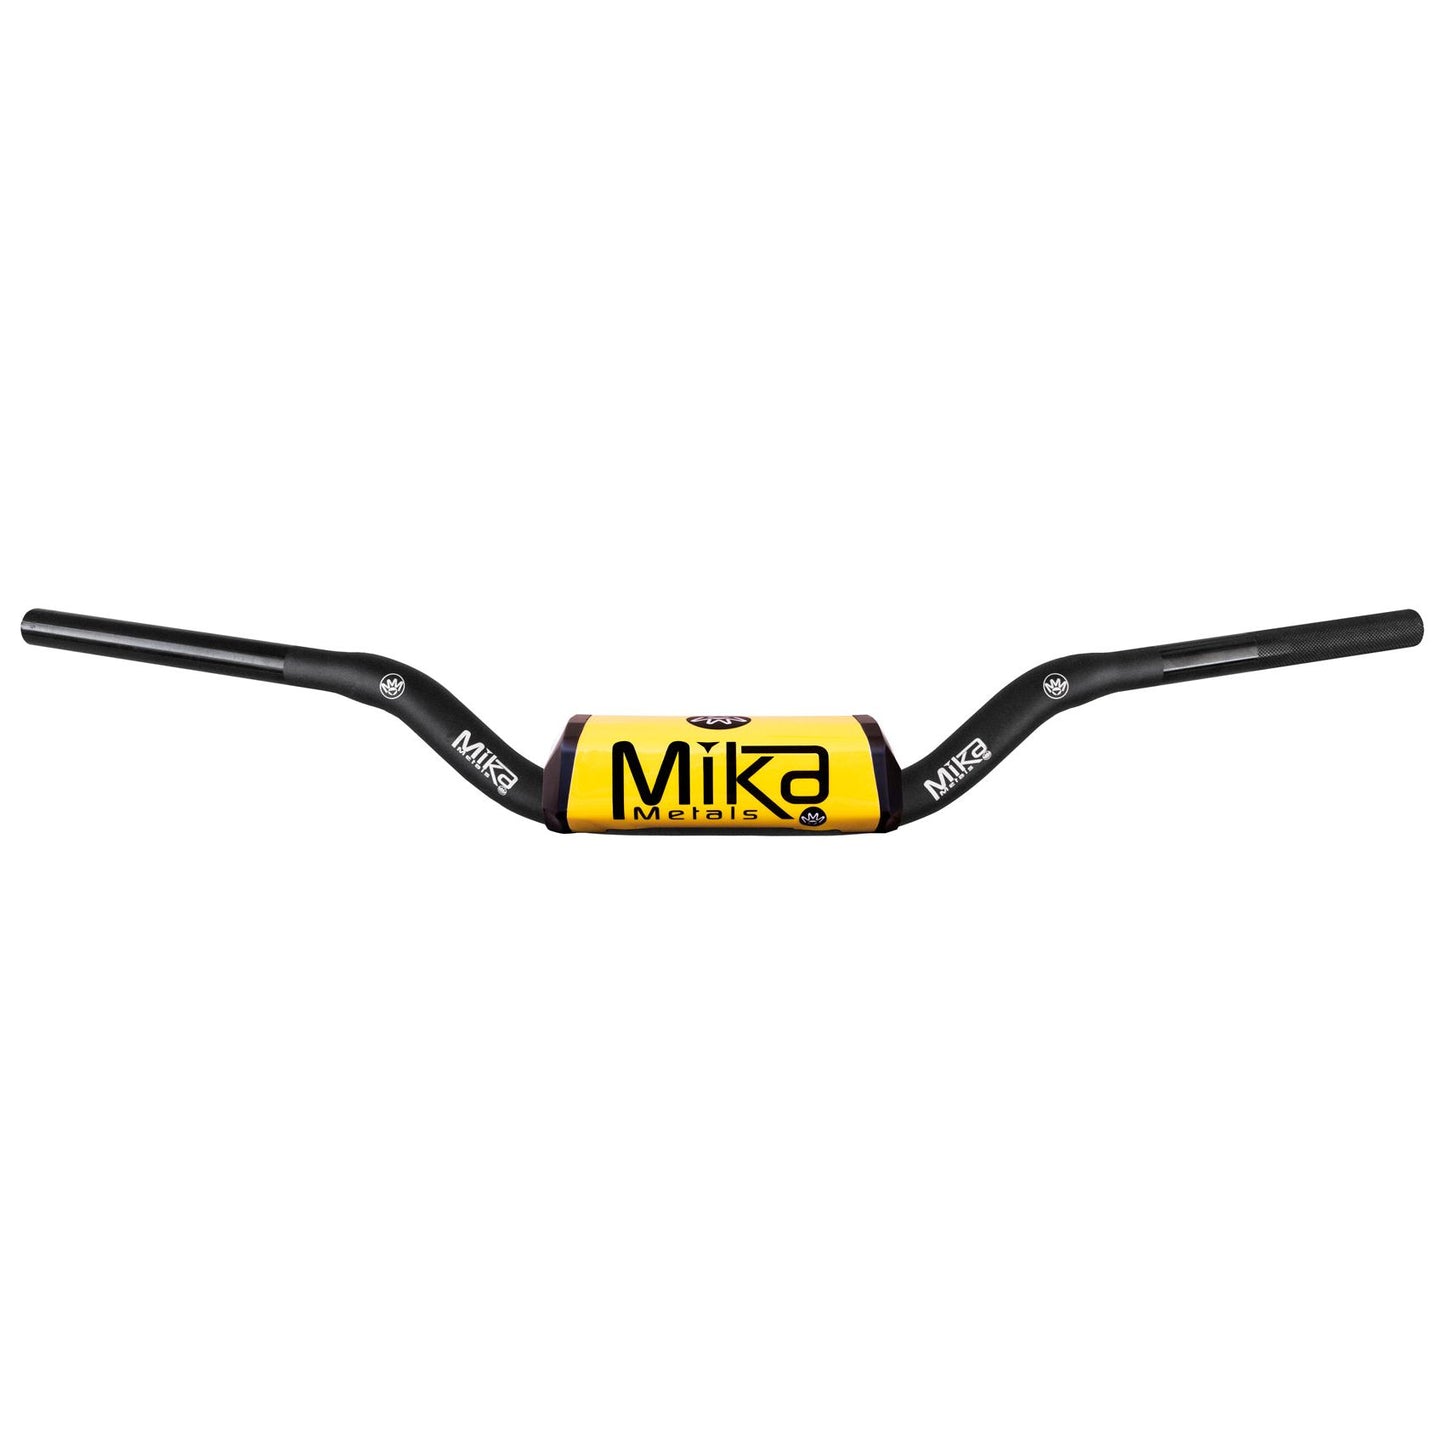 Mika Metals - Raw Series Handlebars 1-1/8"